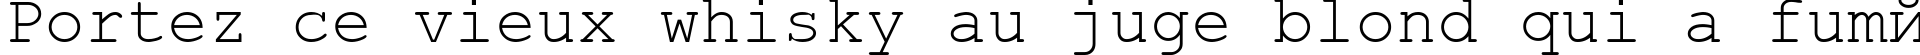 Пример написания шрифтом Courier Stylus текста на французском